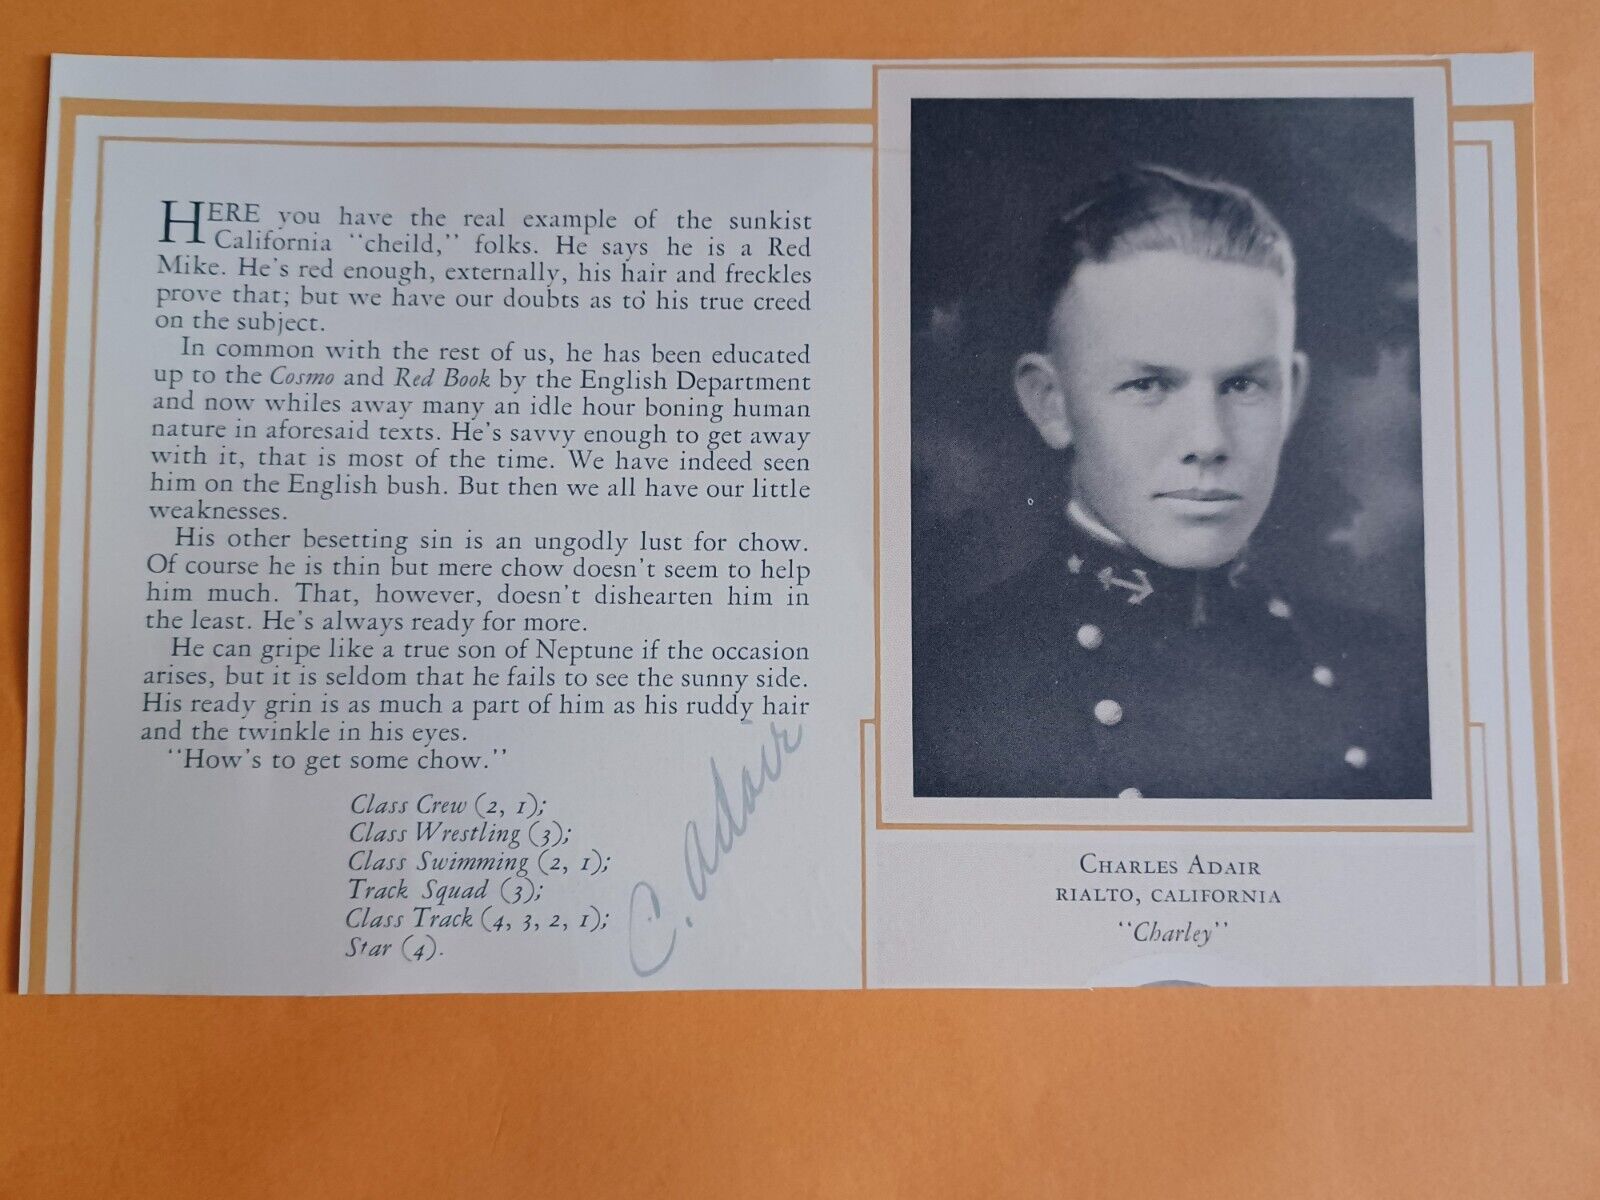 Charles L. Adair (d. 1993) & Philip Niekum Jr. (d. 1981) Signed Photo -WWII Navy